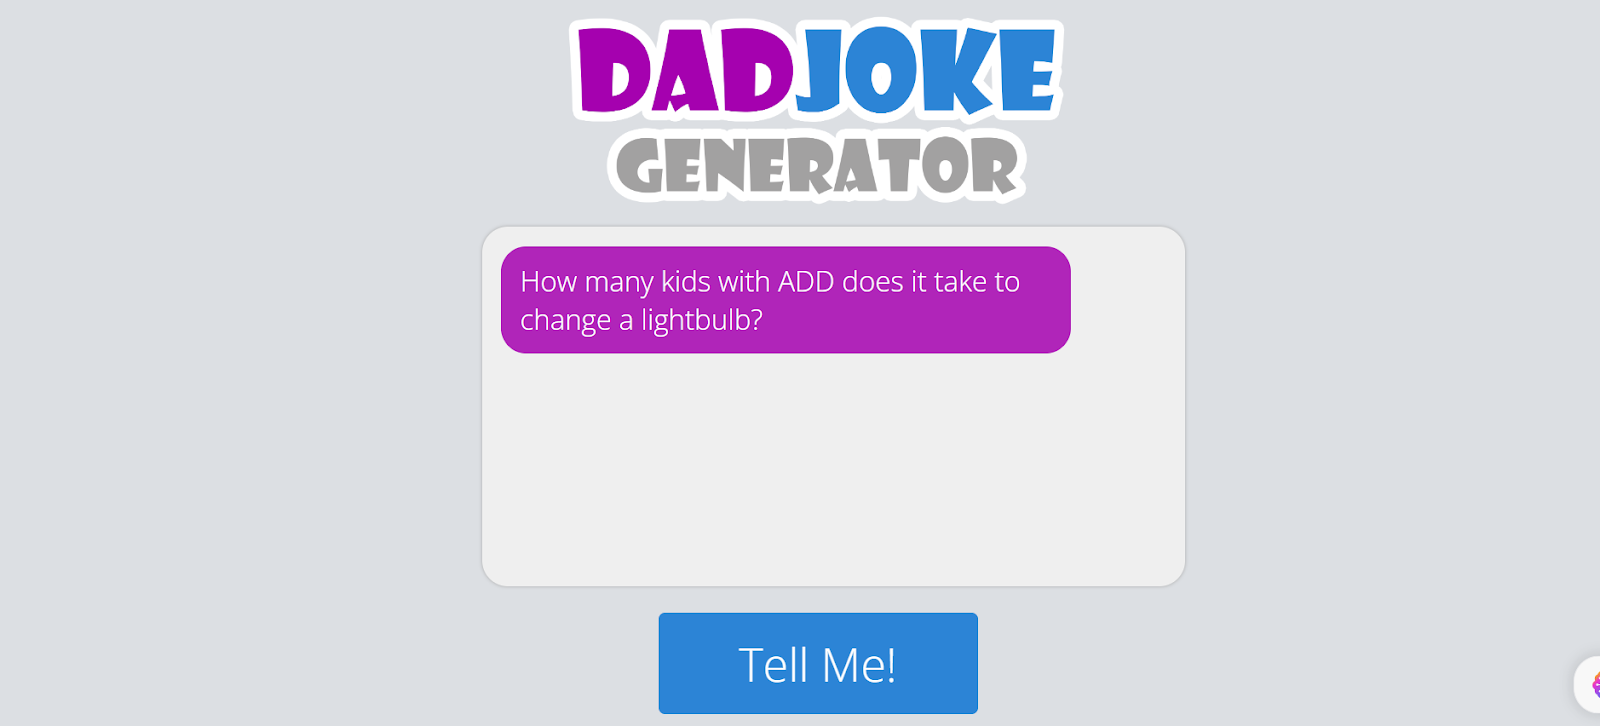 15. The Dad Joke Generator